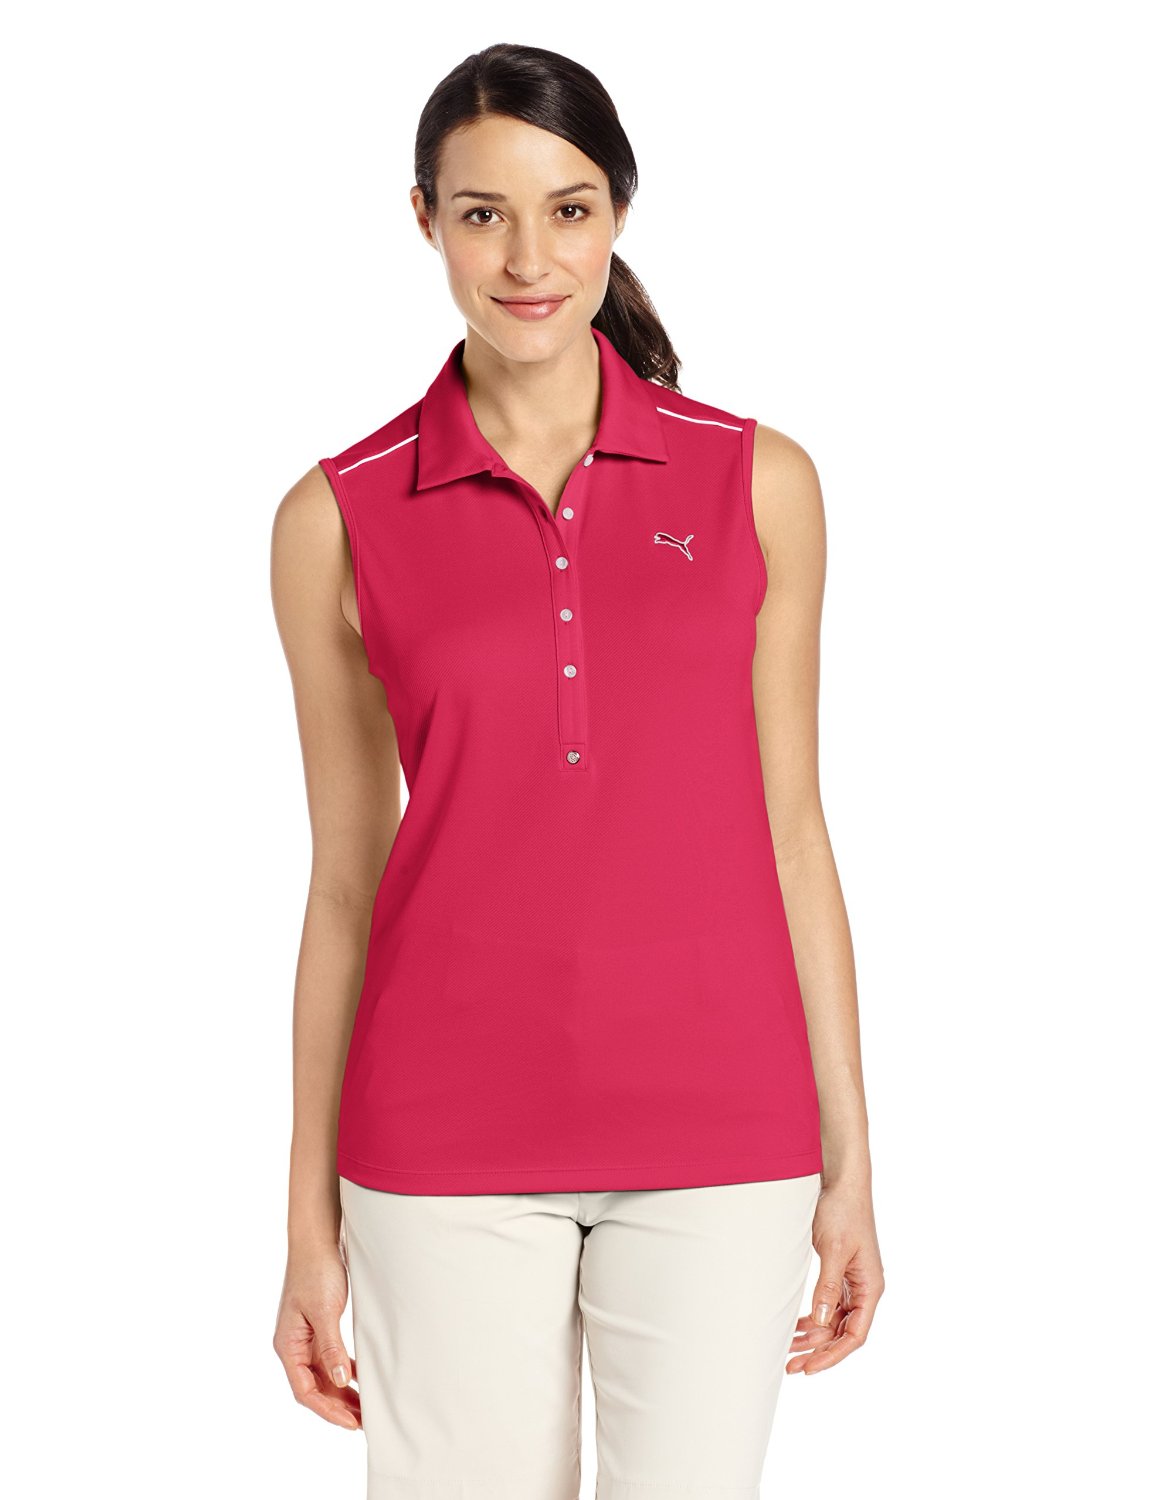 Womens NA Tech Sleeveless Golf Polo Shirts